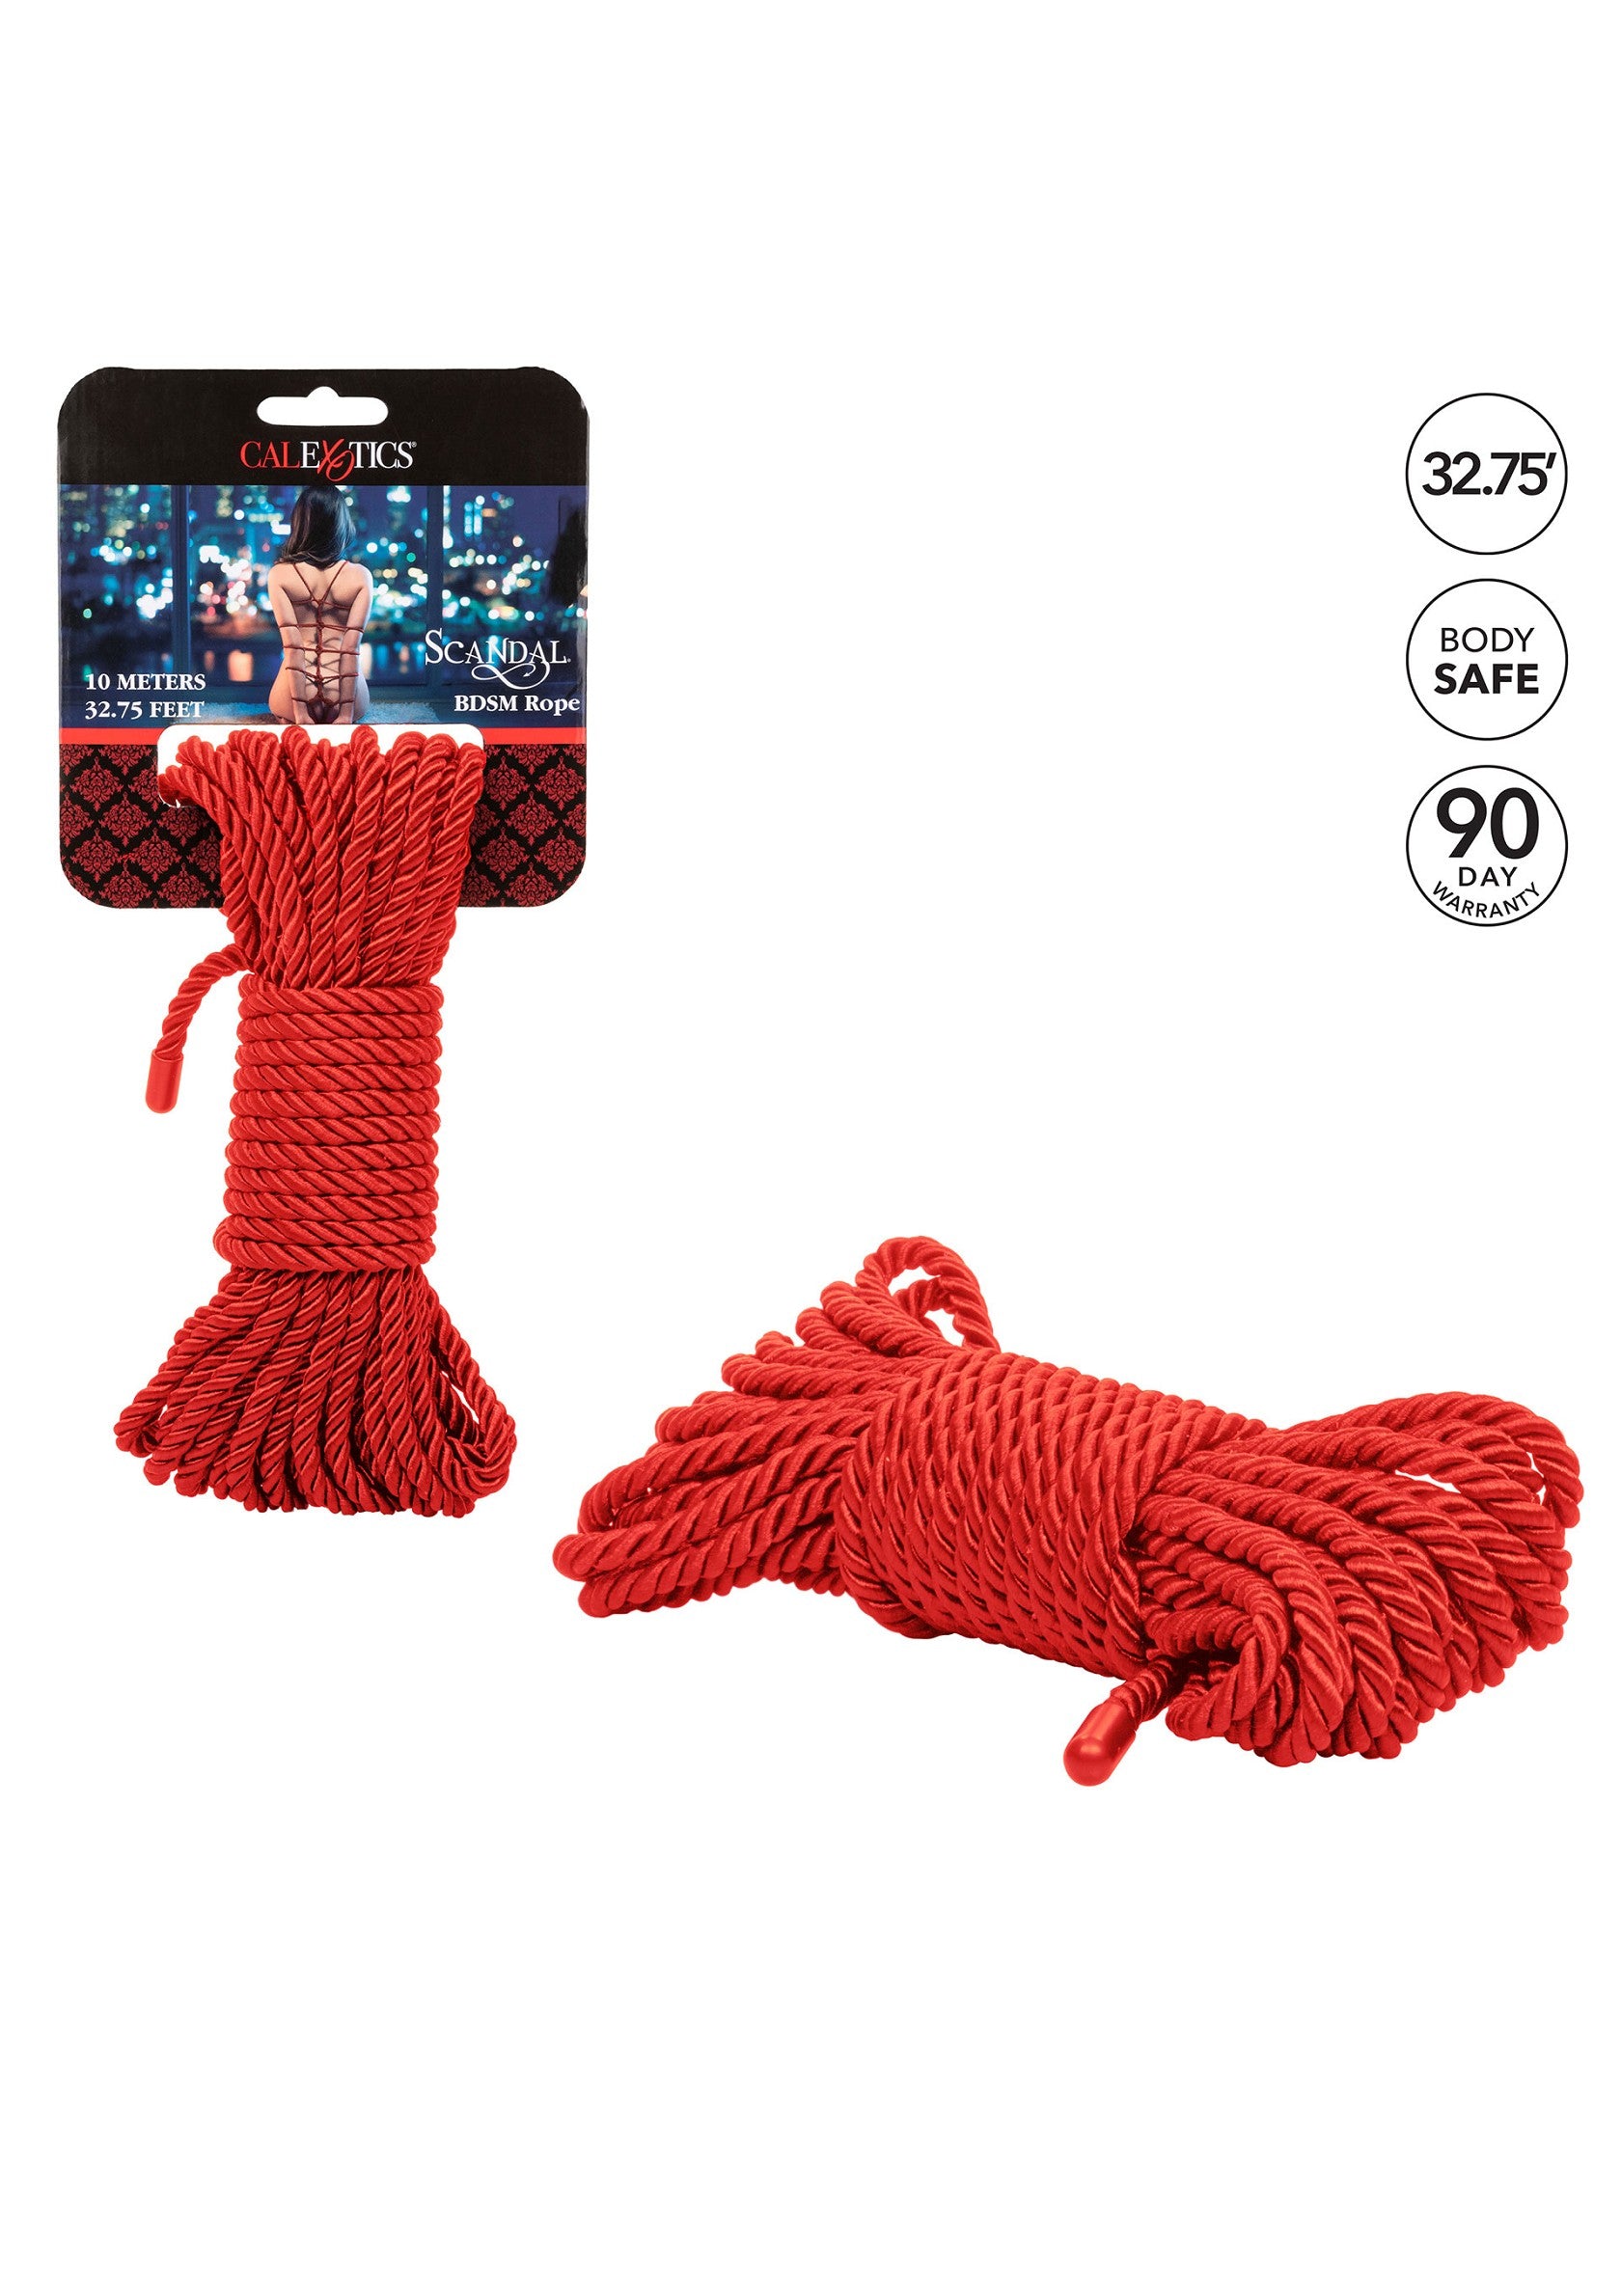 CalExotics Scandal BDSM Rope 32.75'/10 m RED - 1